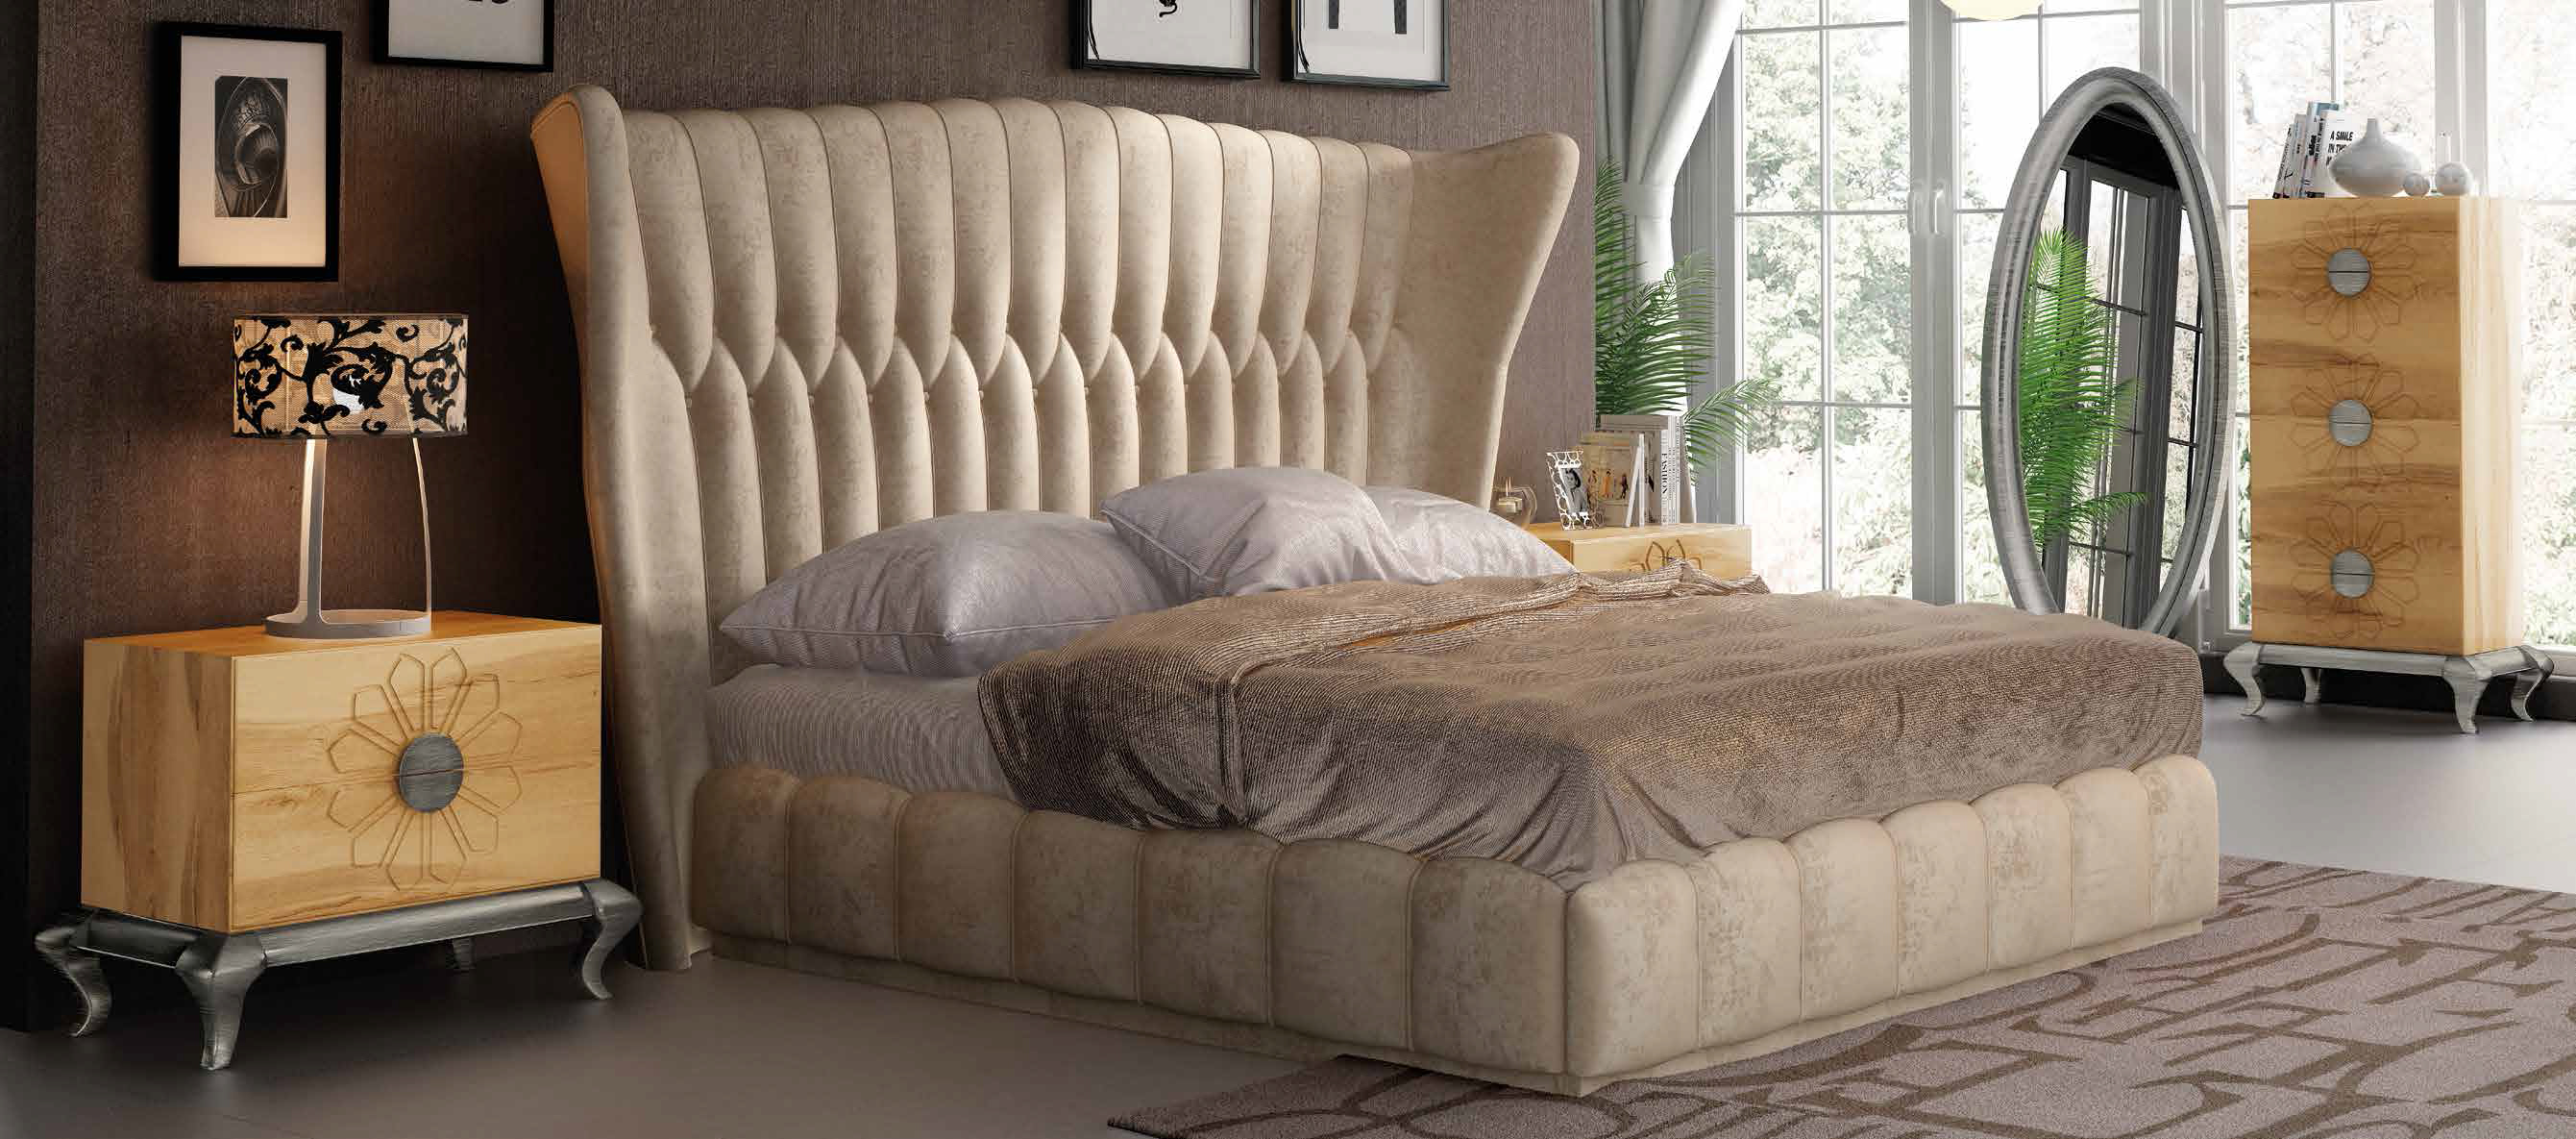 Brands Franco Furniture Bedrooms vol2, Spain DOR 61